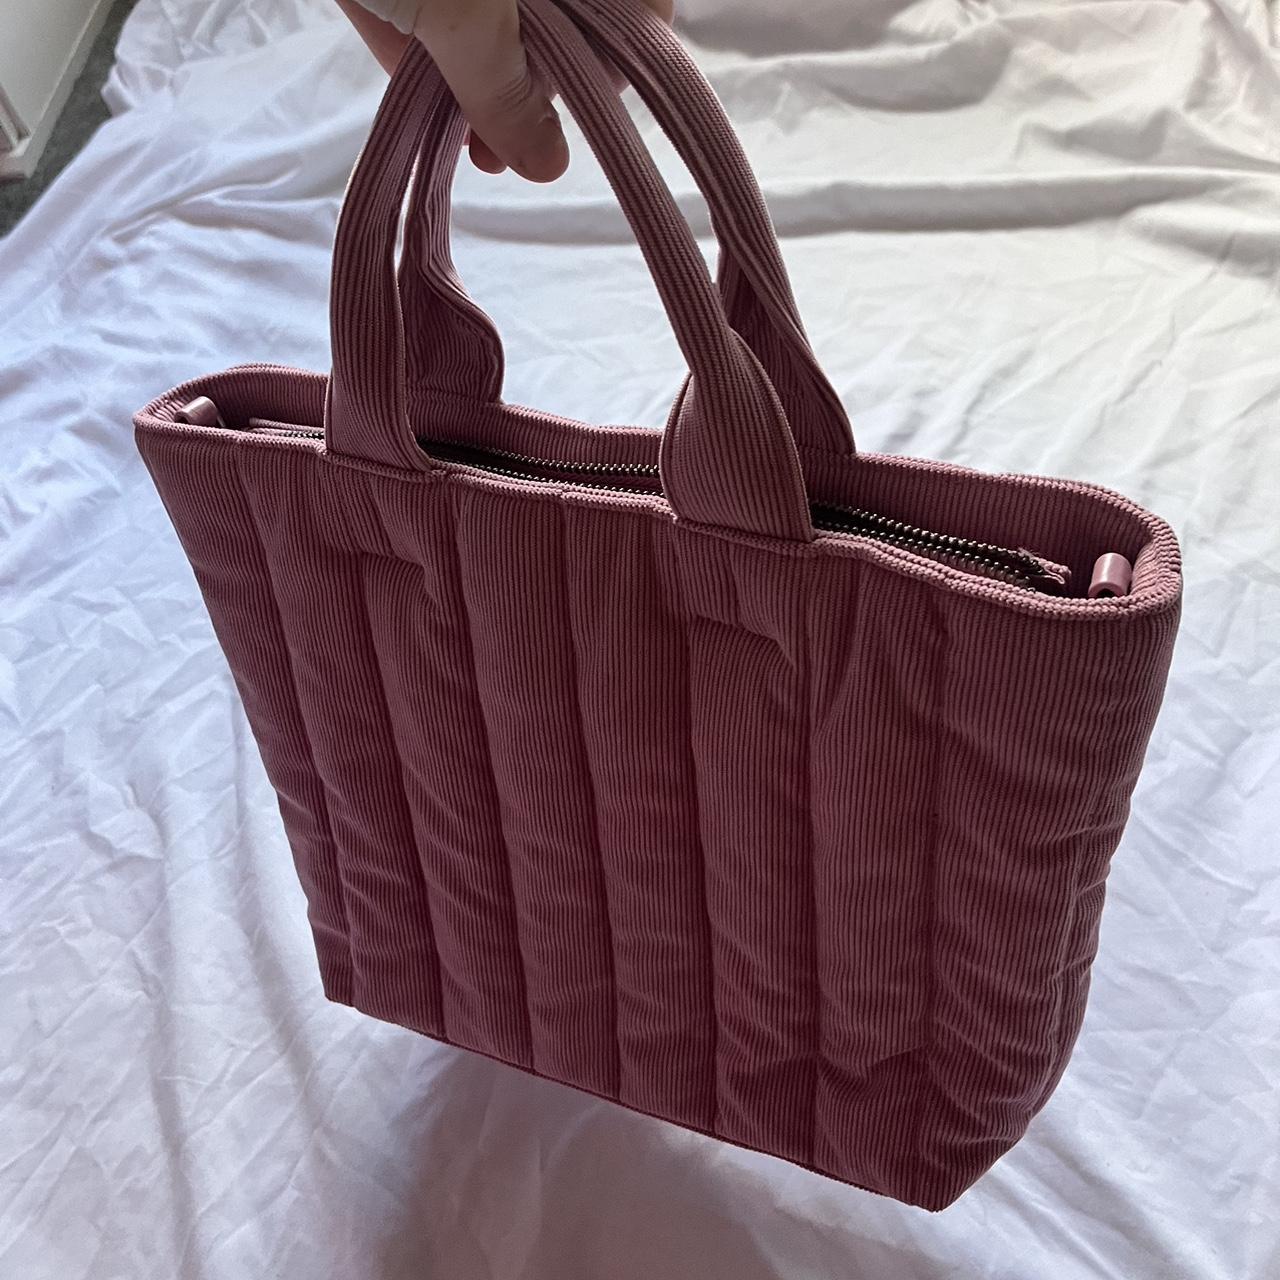 Pink Knit Target Purse | Target purse, Purses, Pink